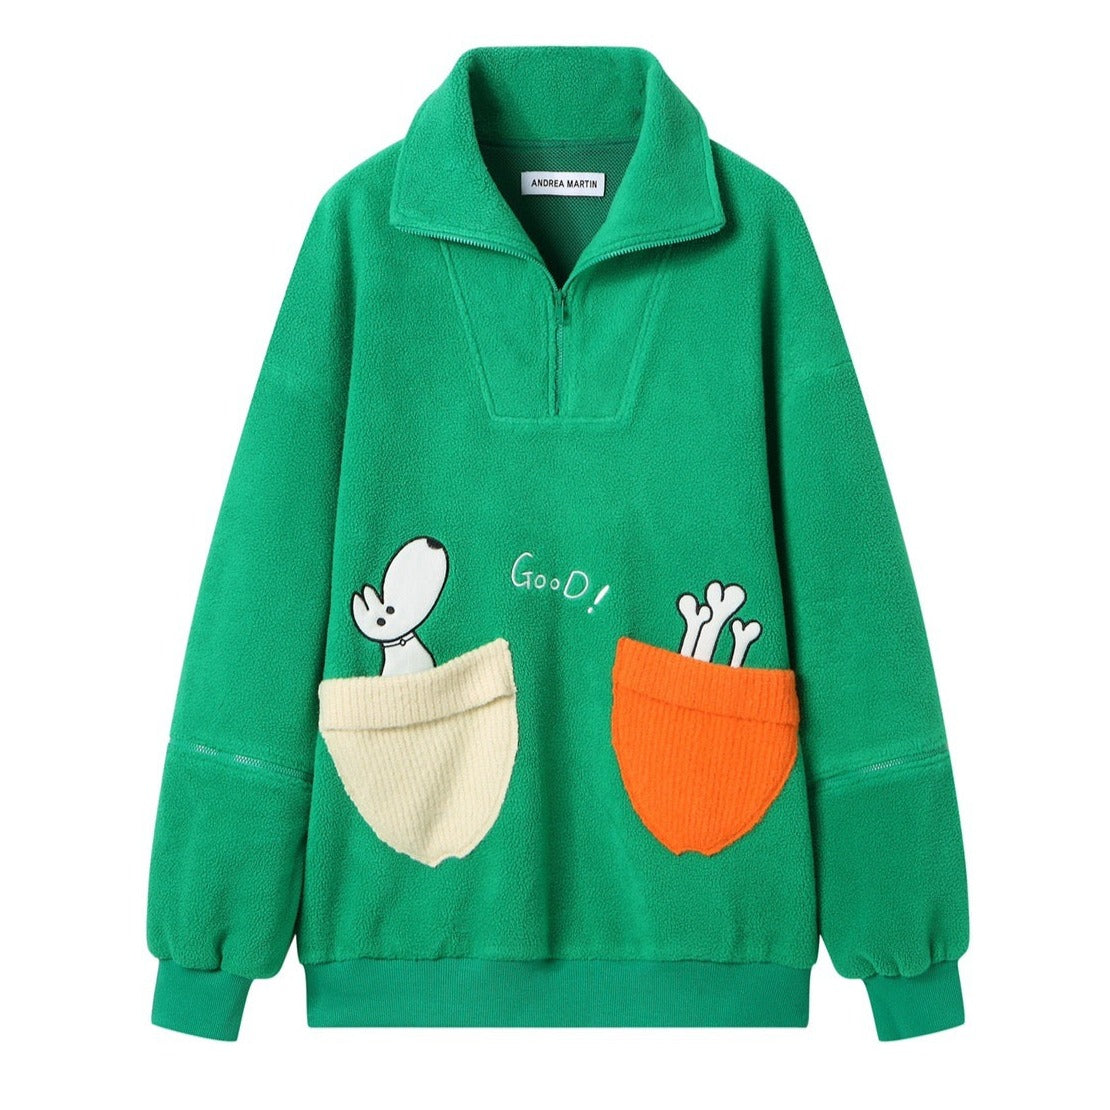 Andrea Martin Knit Pocket Puppy Fleece Sweater Green